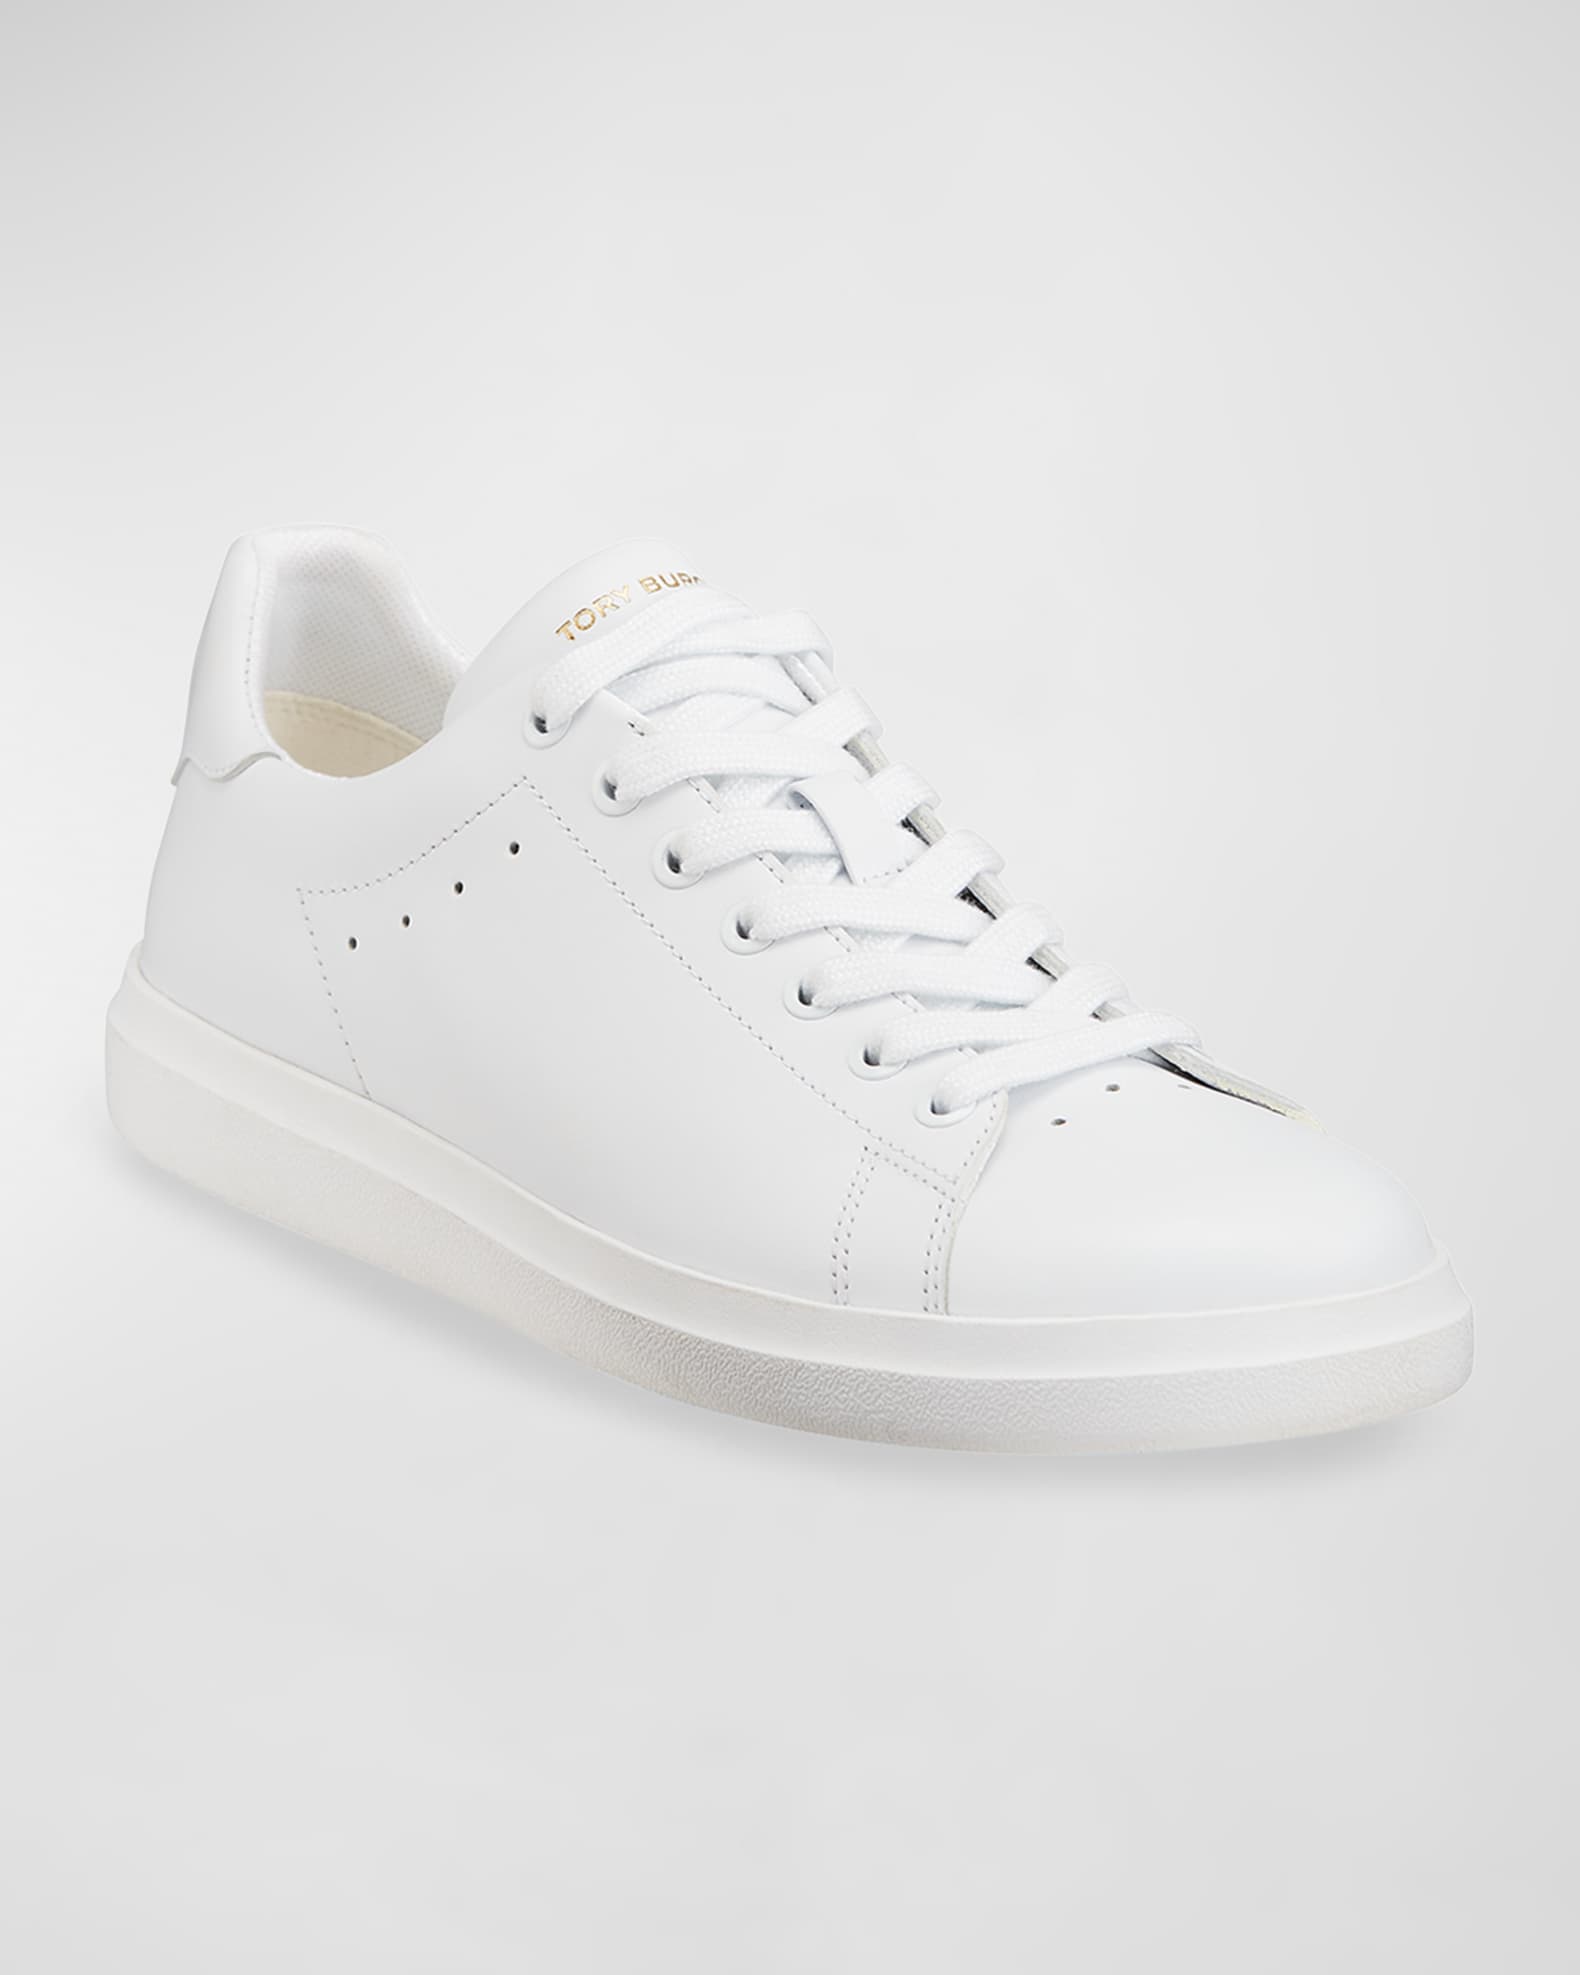 Tory Burch Howell Court Sneakers | Neiman Marcus